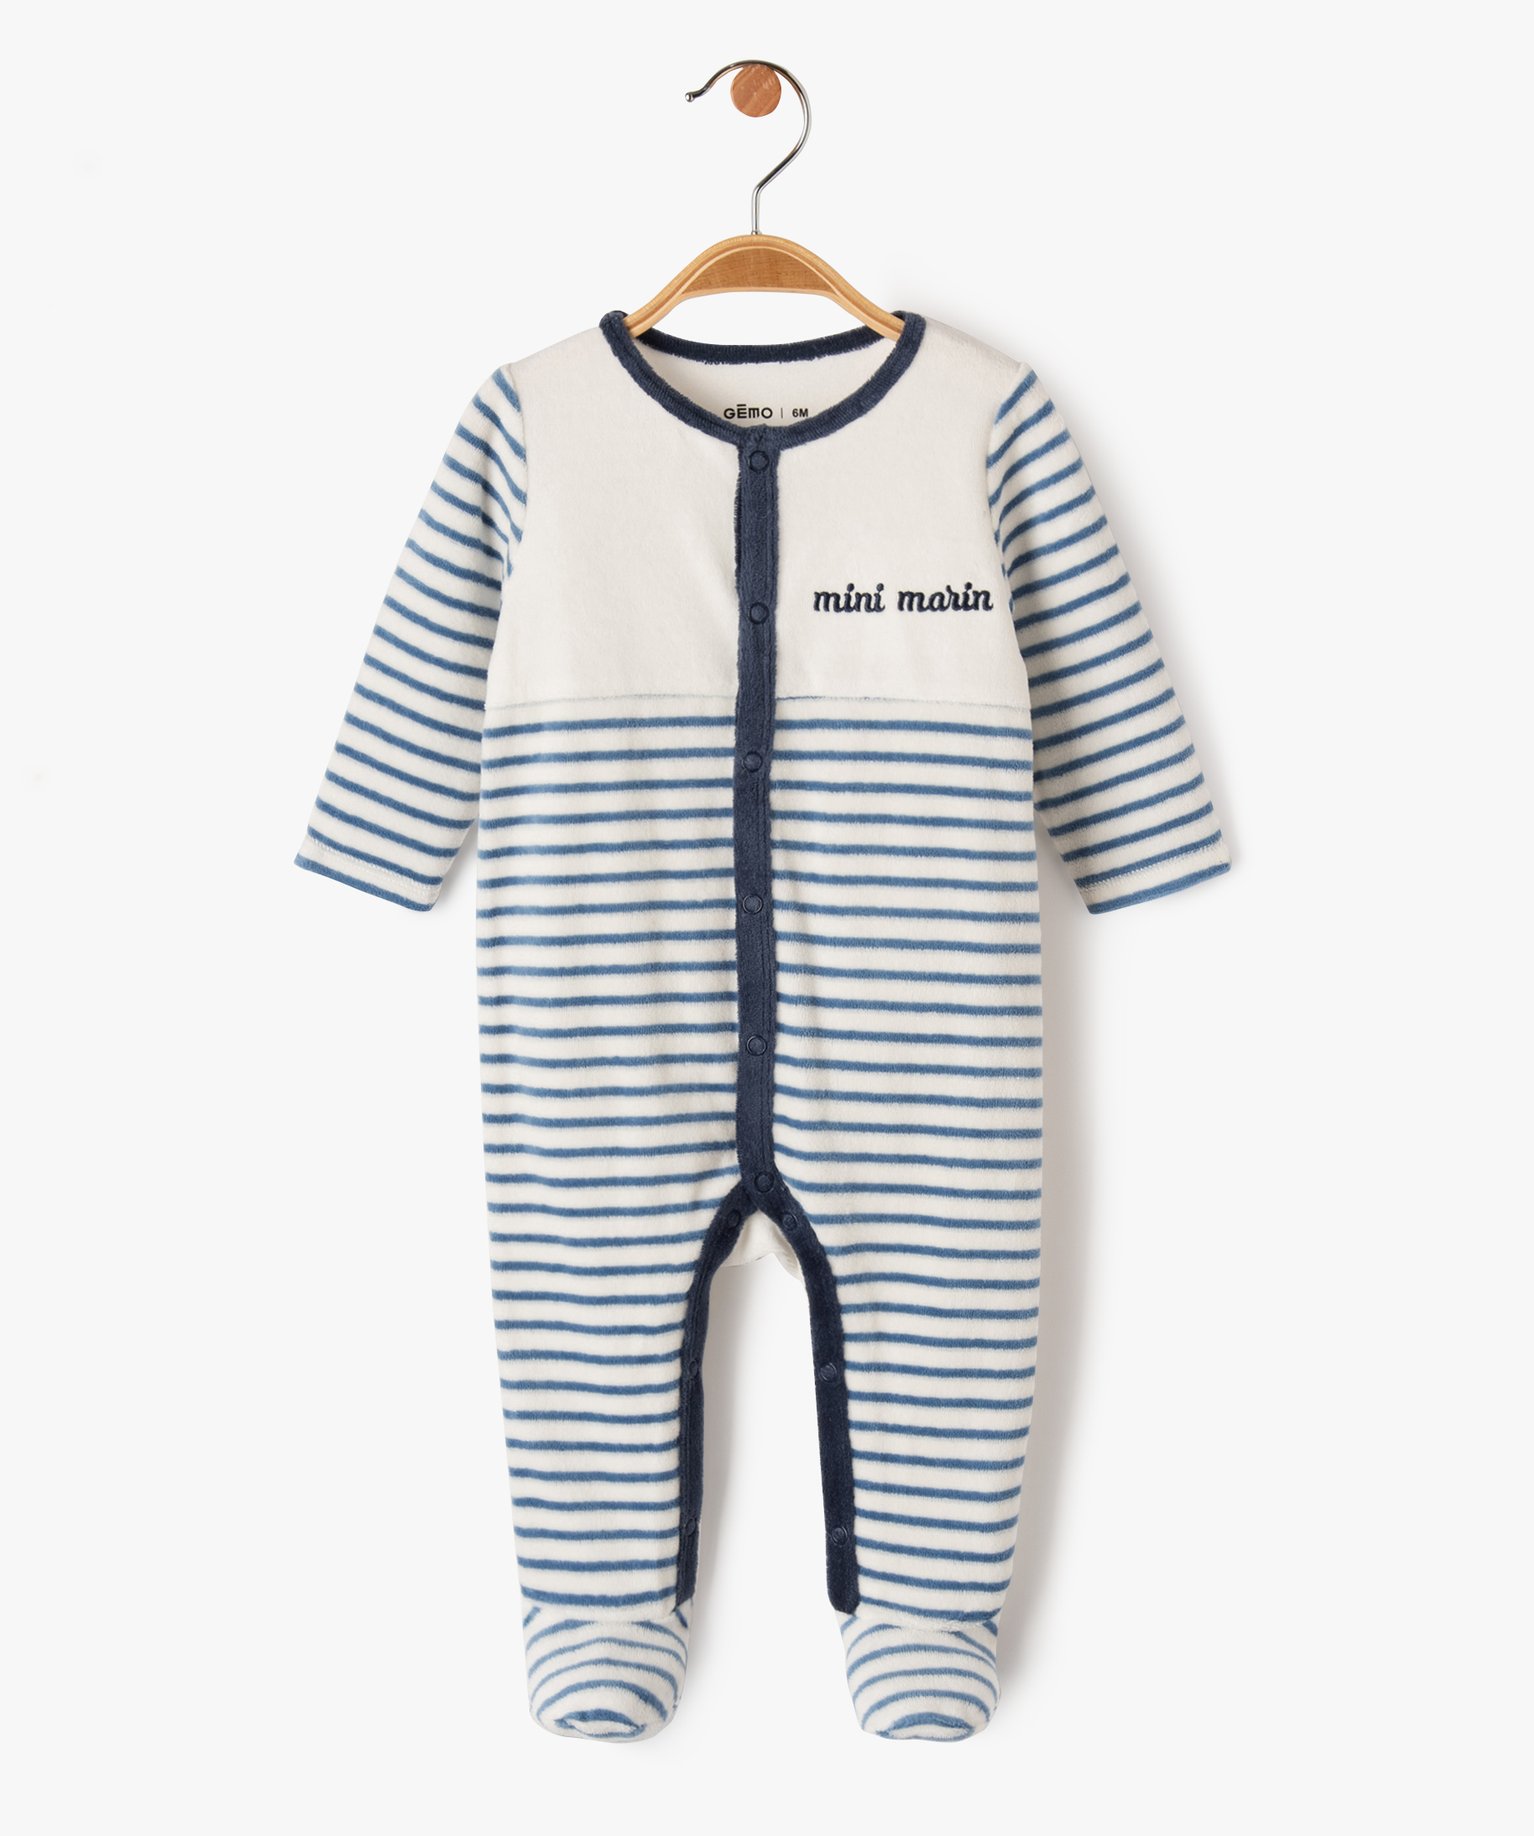 Pyjama en velours à rayures bébé garçon - Préma - bleu - GEMO